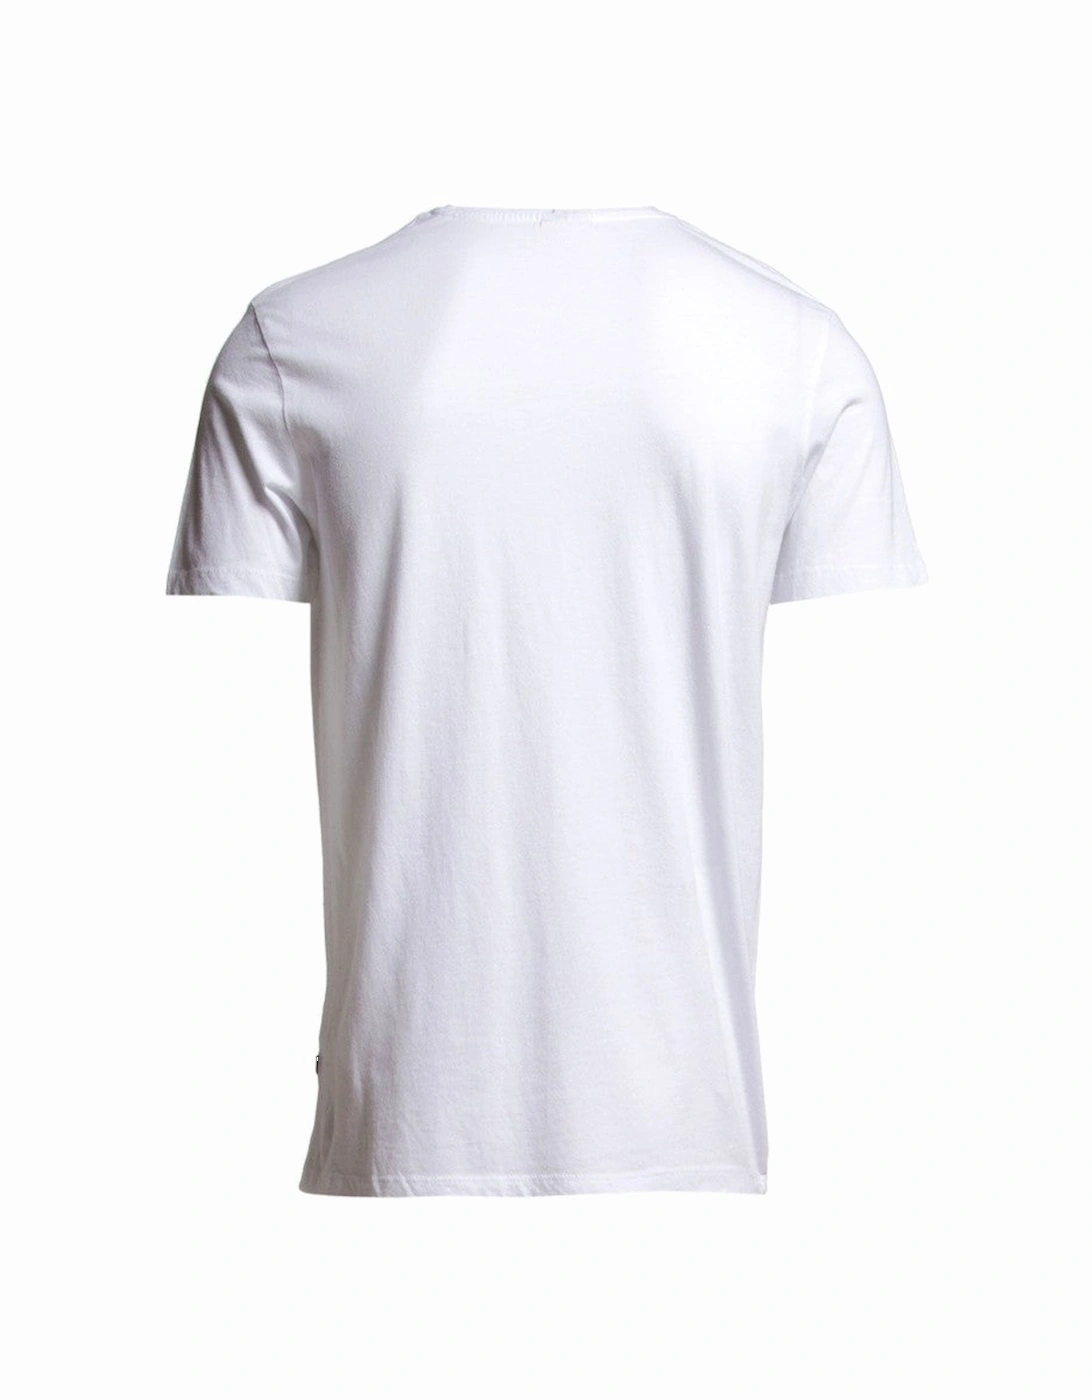 Jack and Jones Premium David Bowie Tee White T-Shirt